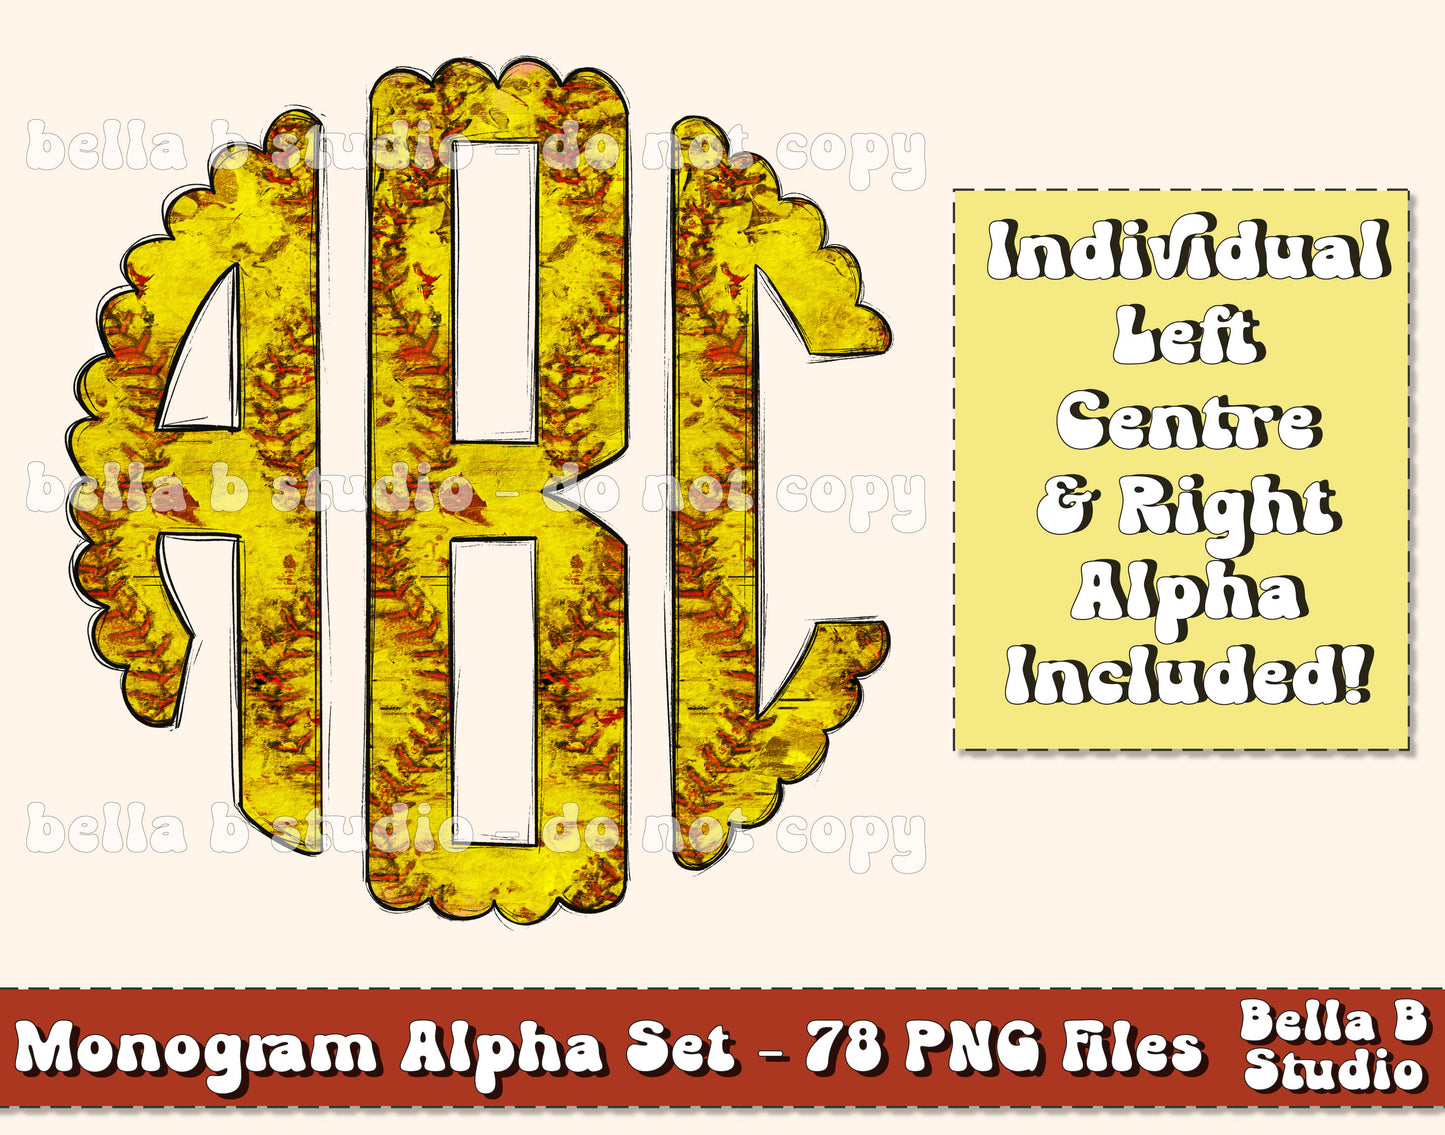 Softball Grunge Scalloped Monogram Alpha Set